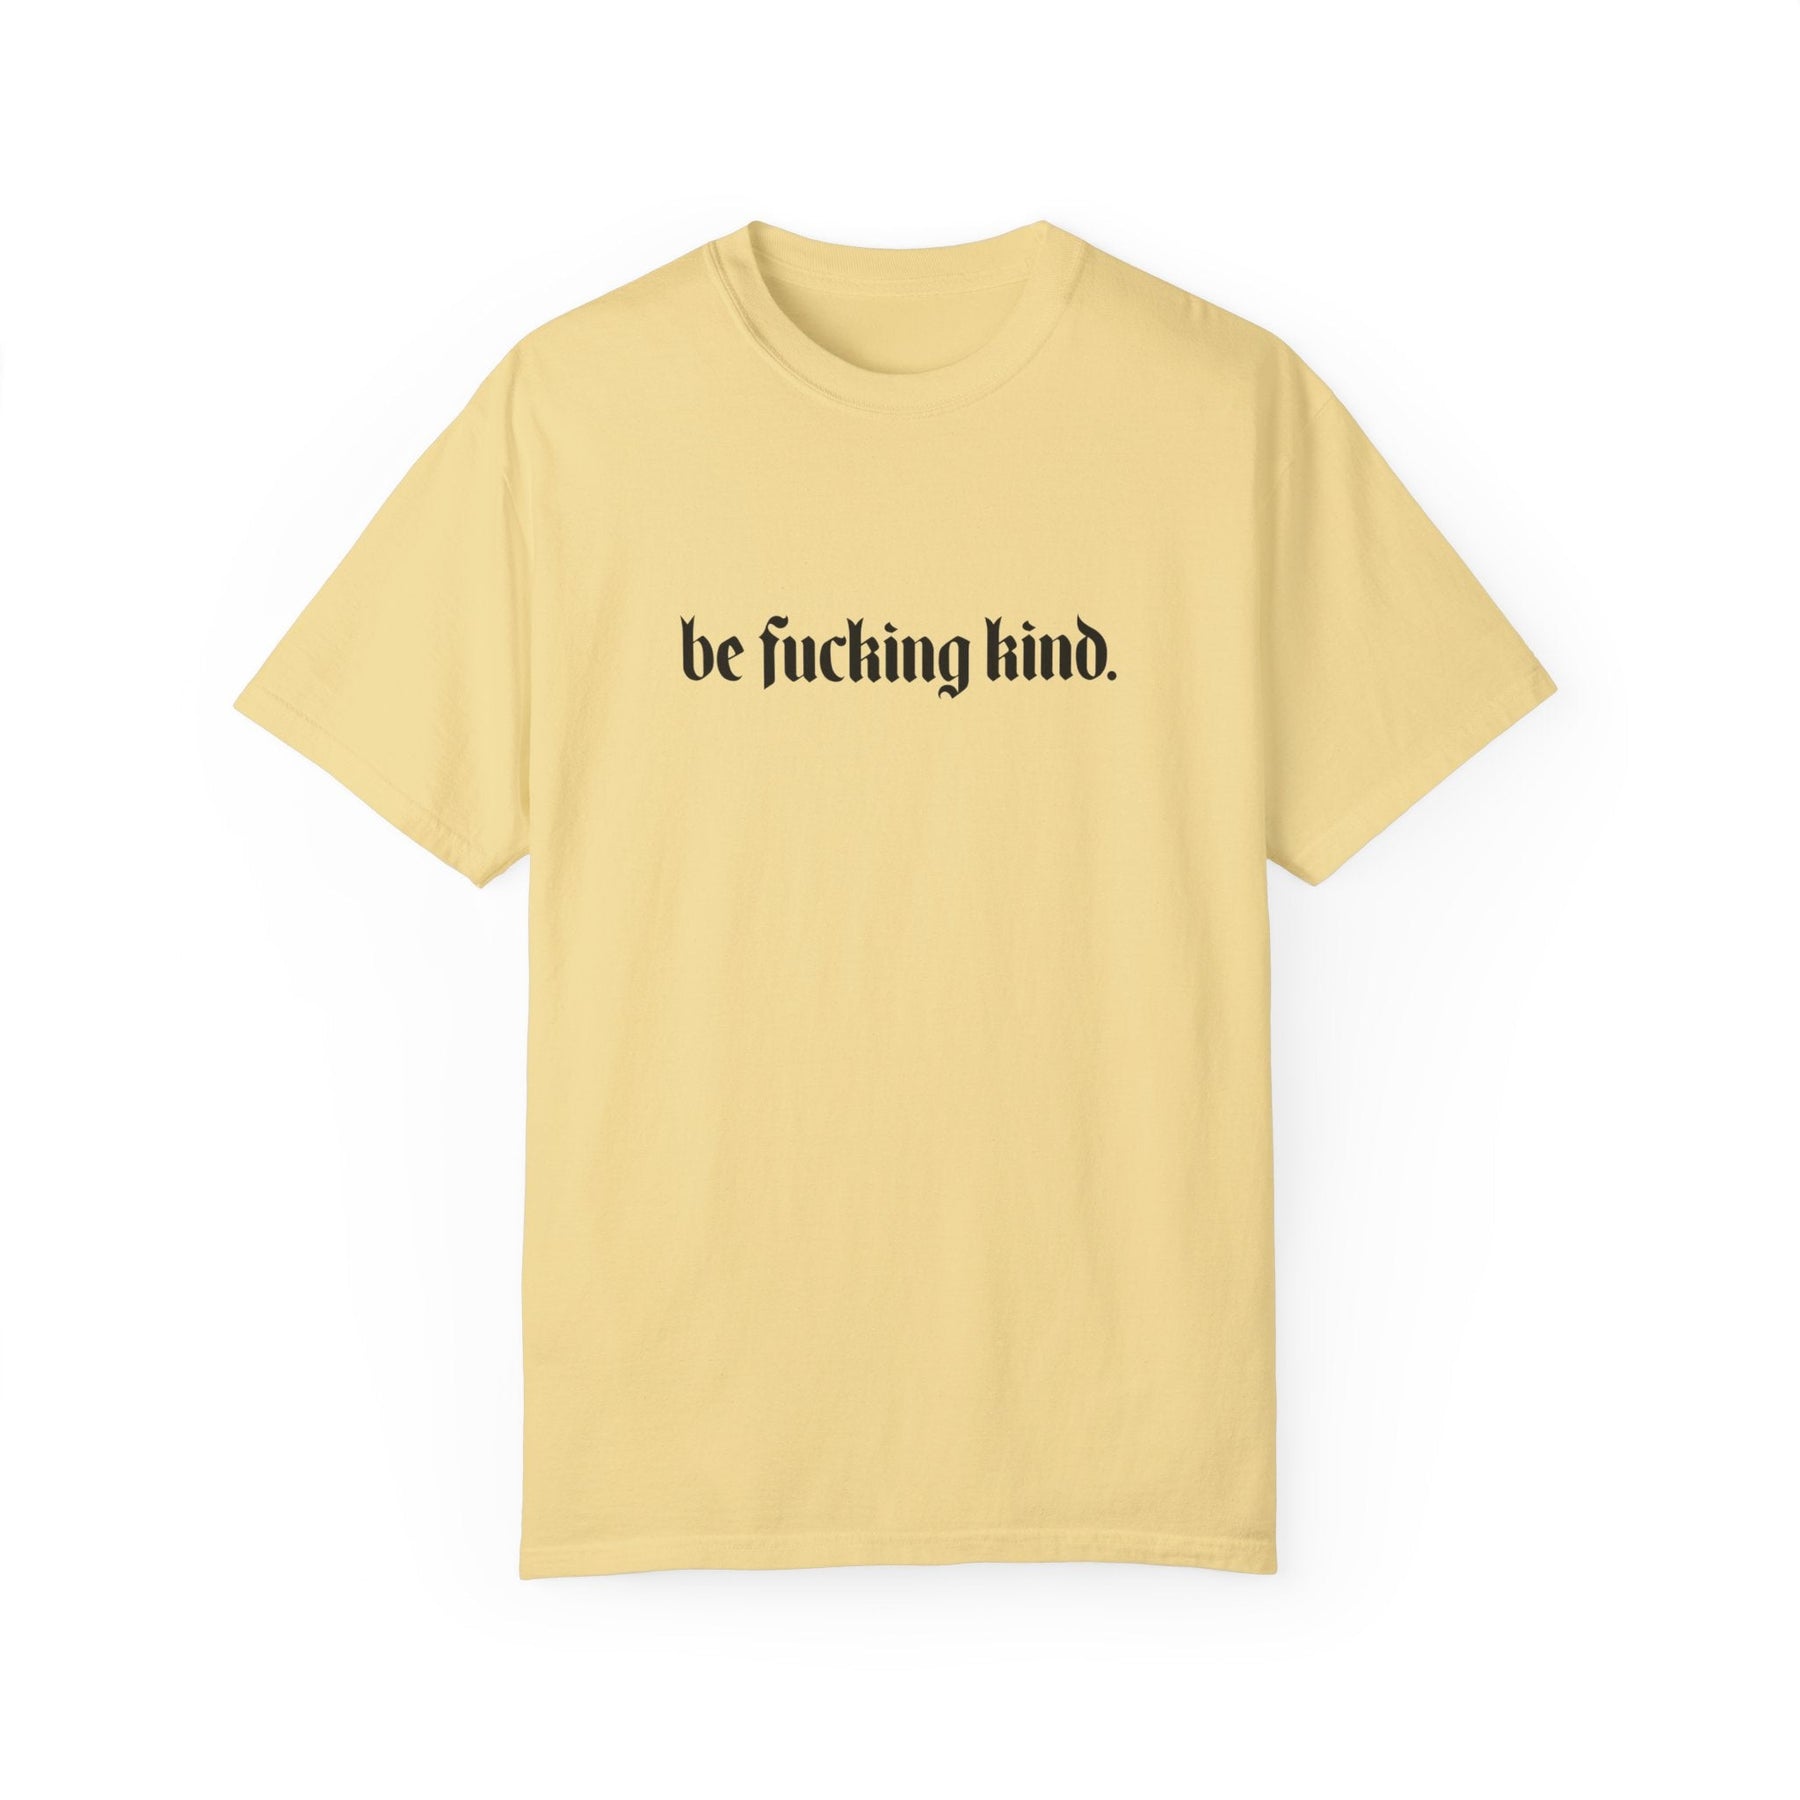 Be Fucking Kind Comfy Tee - Goth Cloth Co.T - Shirt30305489708659363695